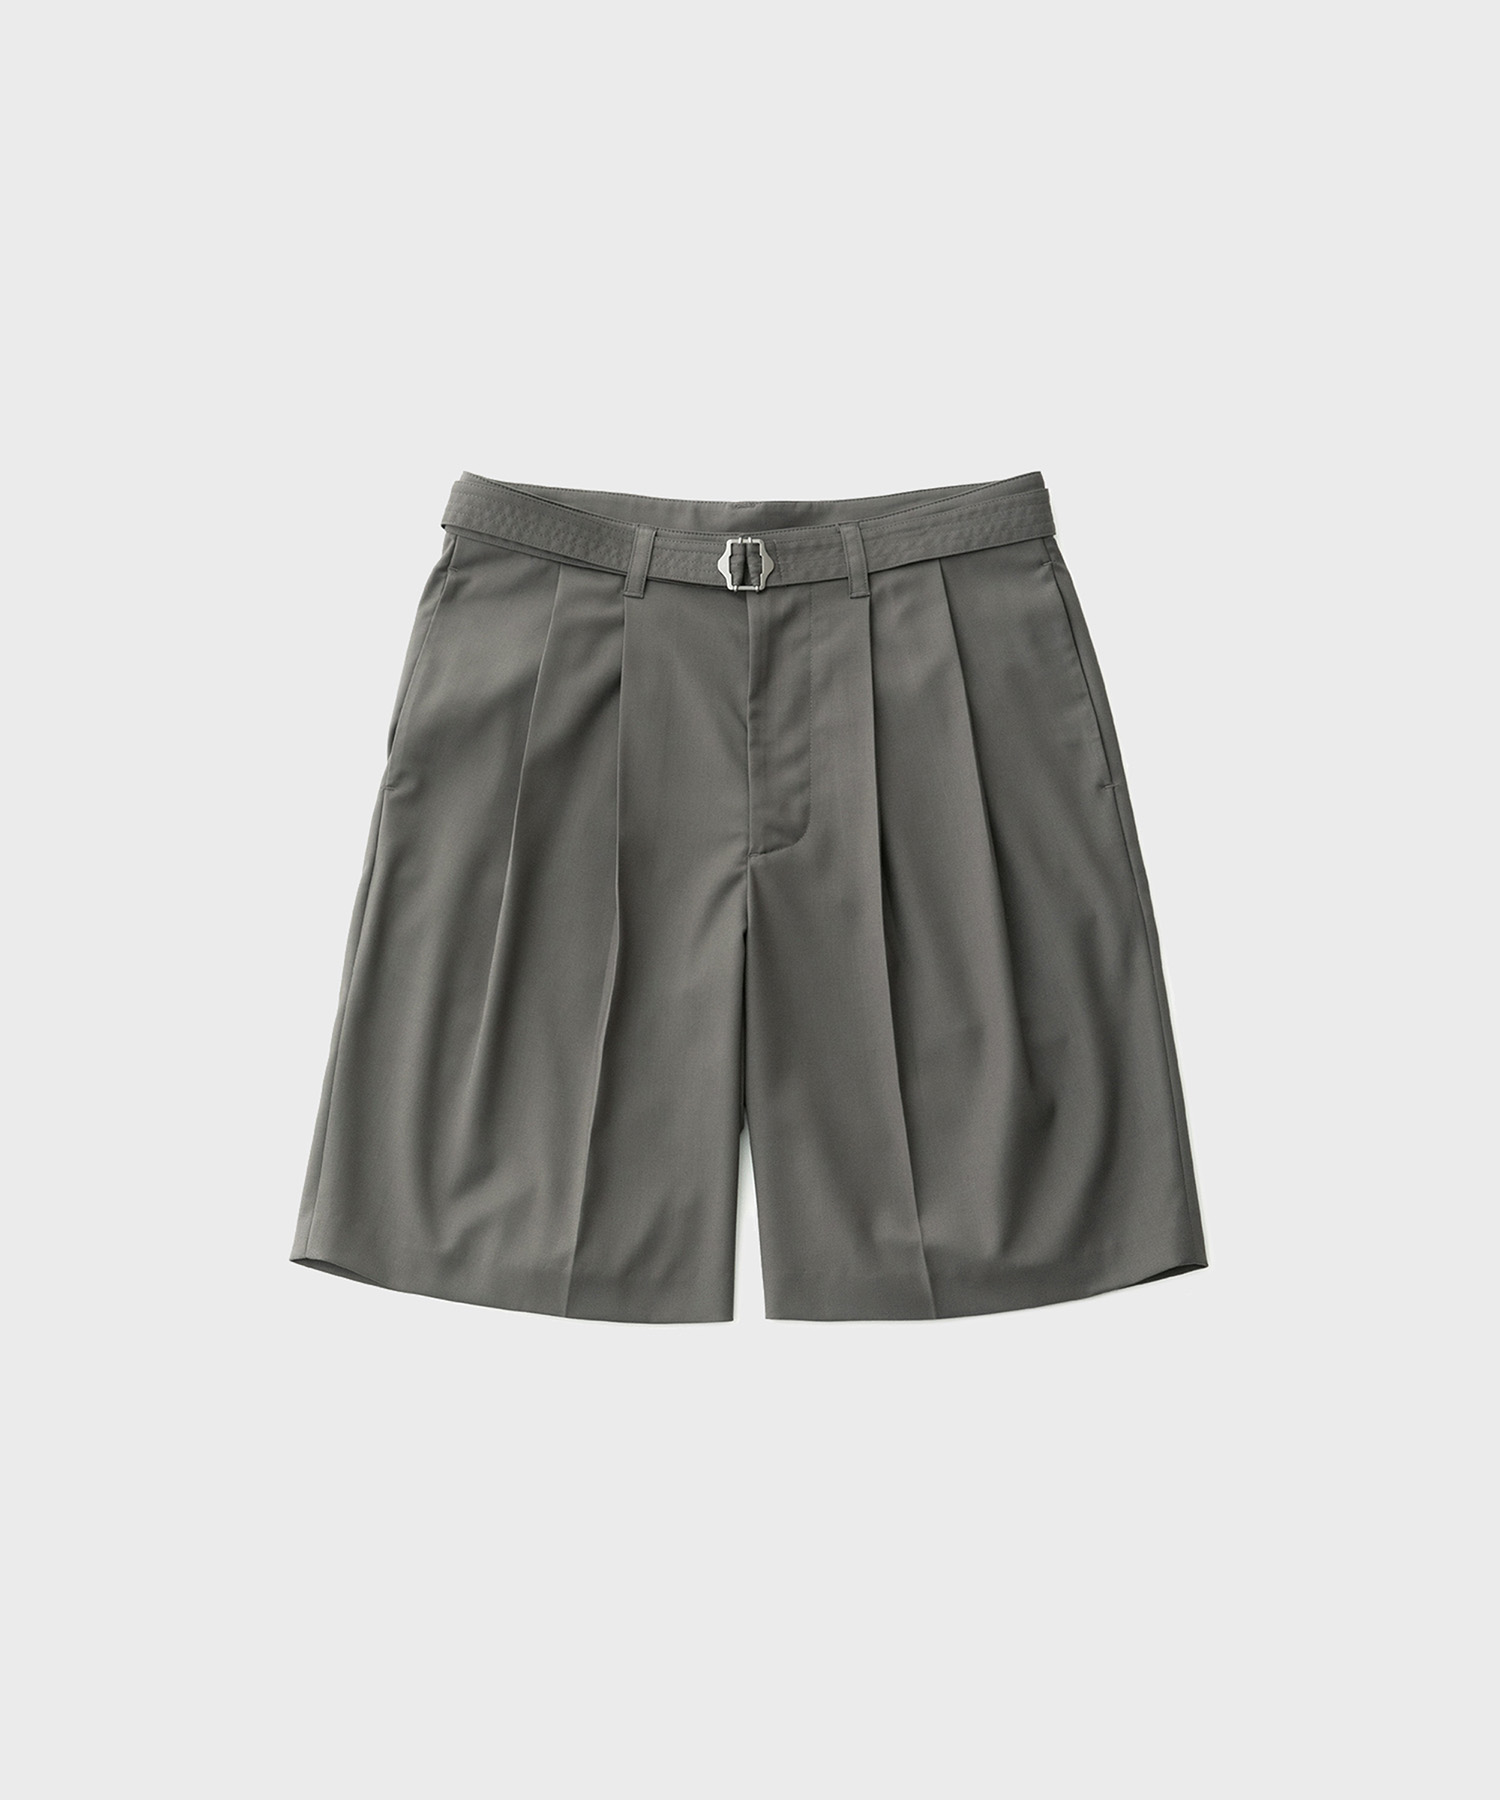 Hemingway Belted Shorts (Olive Gray)